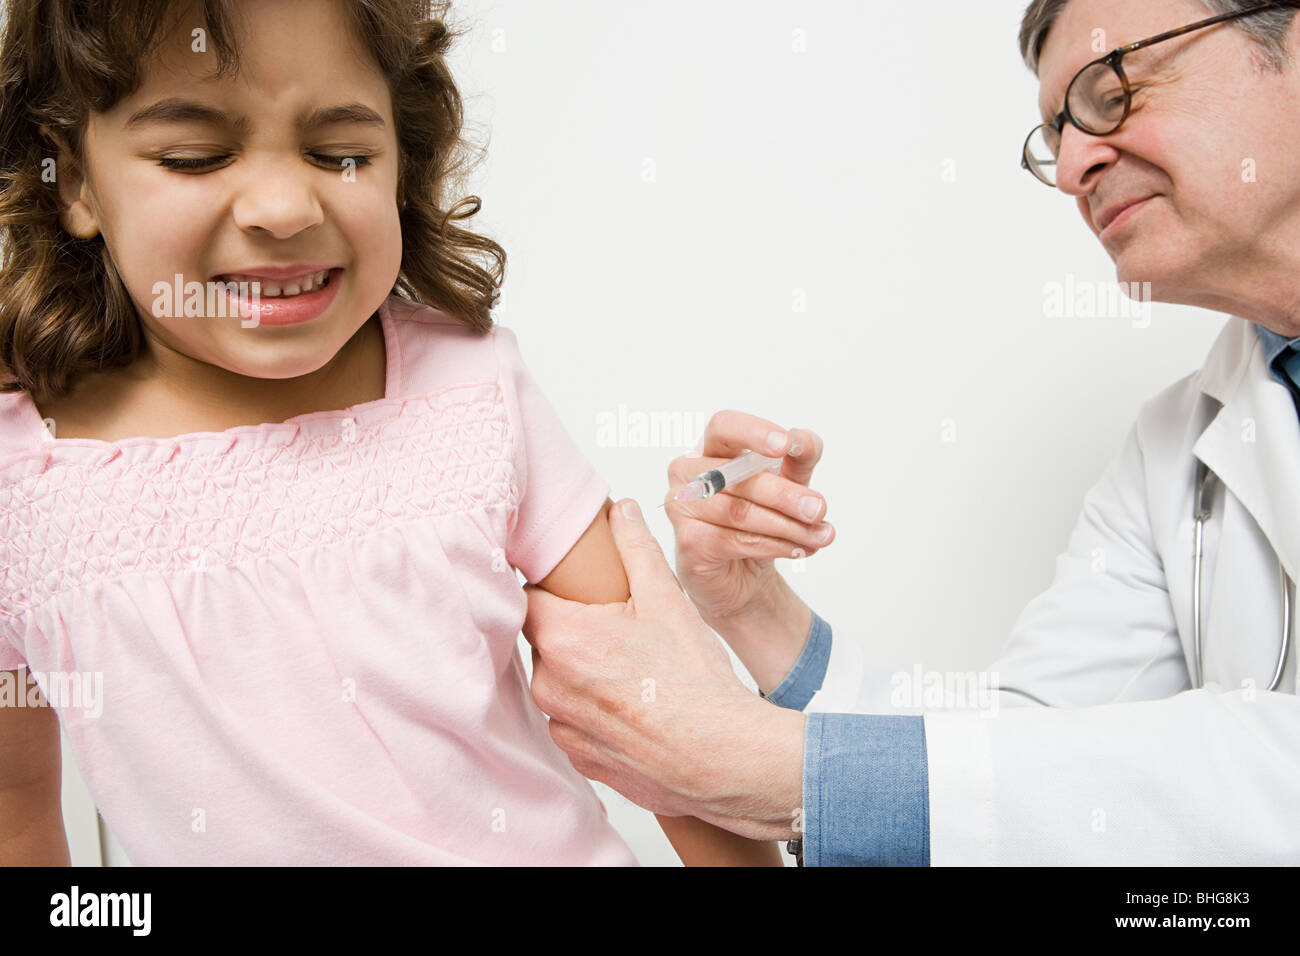 Girl getting immunization Stock Photo